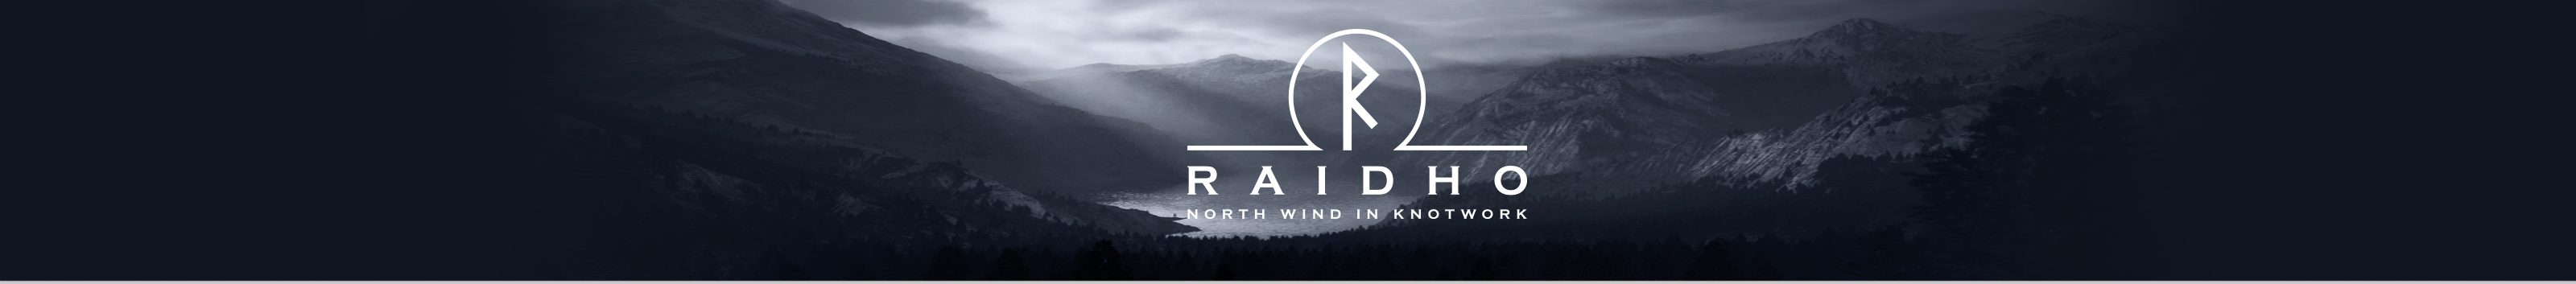 RAIDHO DMT's profile banner